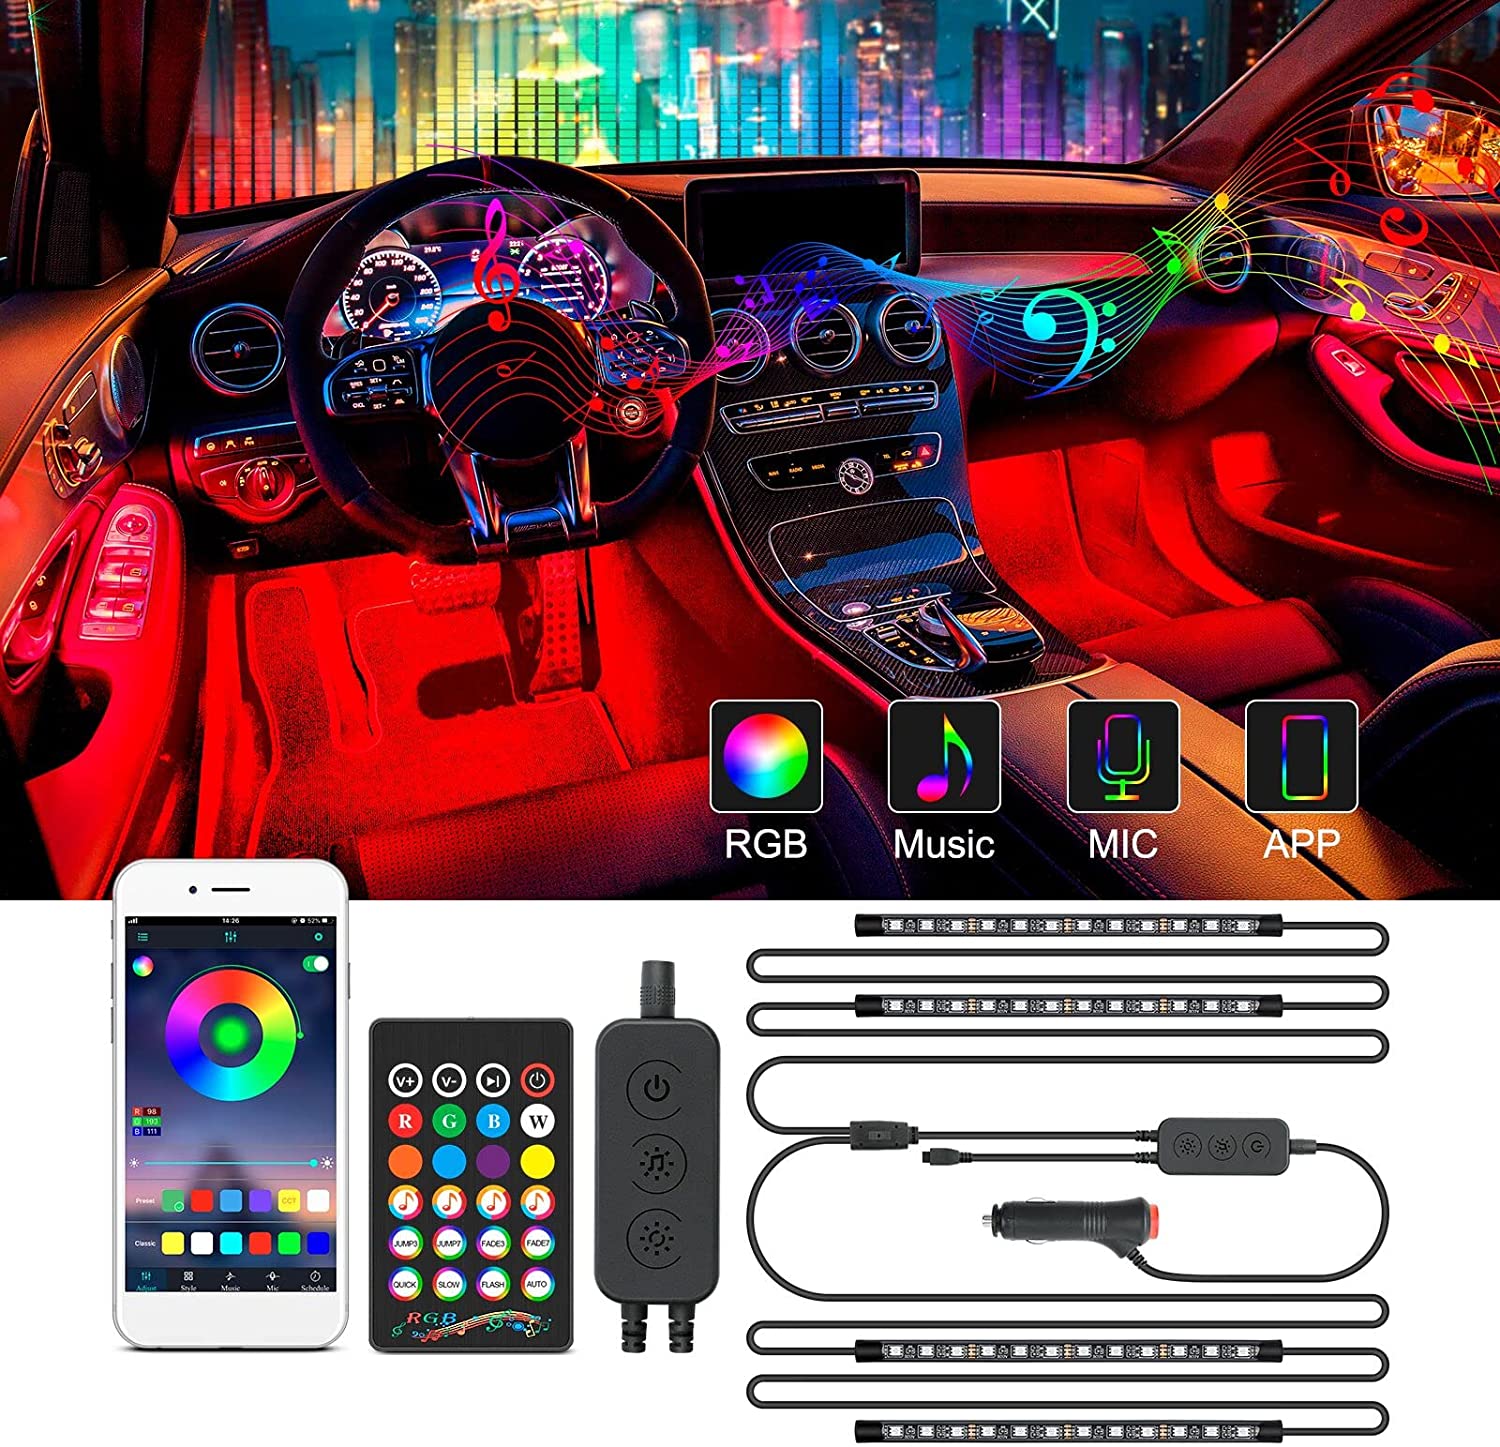 Car LED Interior Light Strips Car RGB Atmosphere Light Ambiente